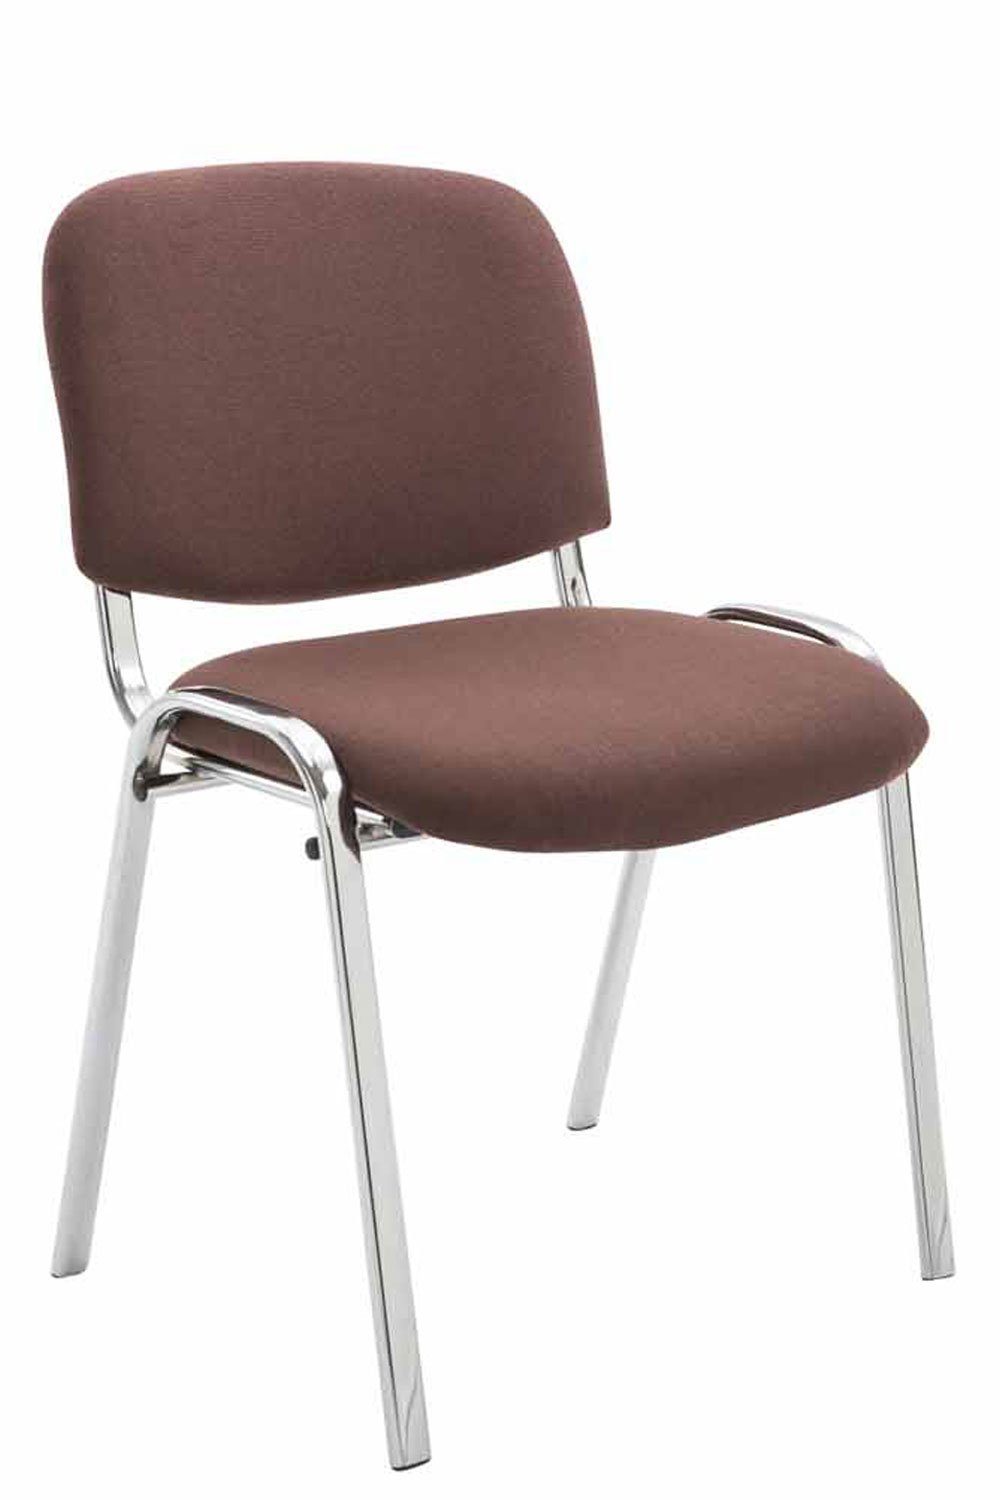 mit Messestuhl), - Warteraumstuhl Metall Besucherstuhl Keen - Sitzfläche: - hochwertiger (Besprechungsstuhl TPFLiving - Konferenzstuhl braun Gestell: chrom Stoff Polsterung